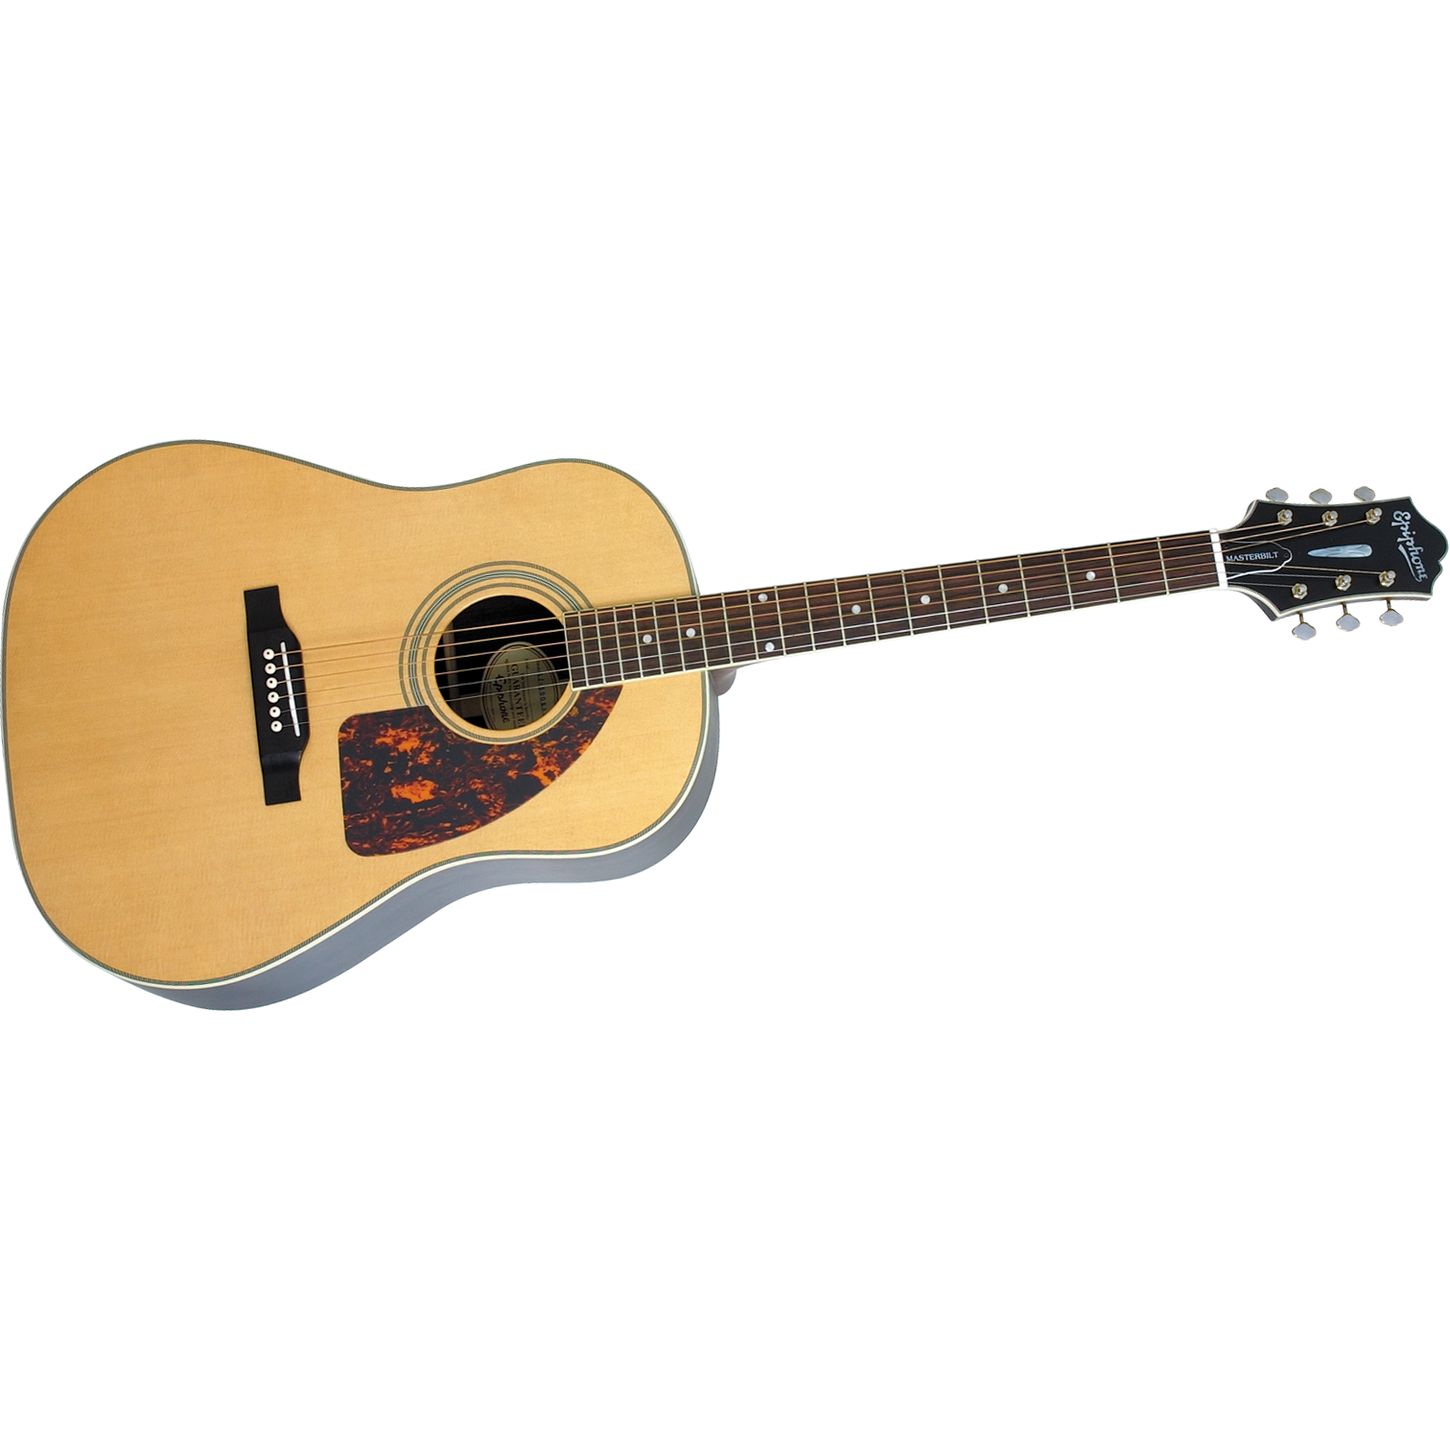 Broken Epiphone Masterbuilt AJ 500RE Acoustic Guitar w Esonic 2 Preamp as Is